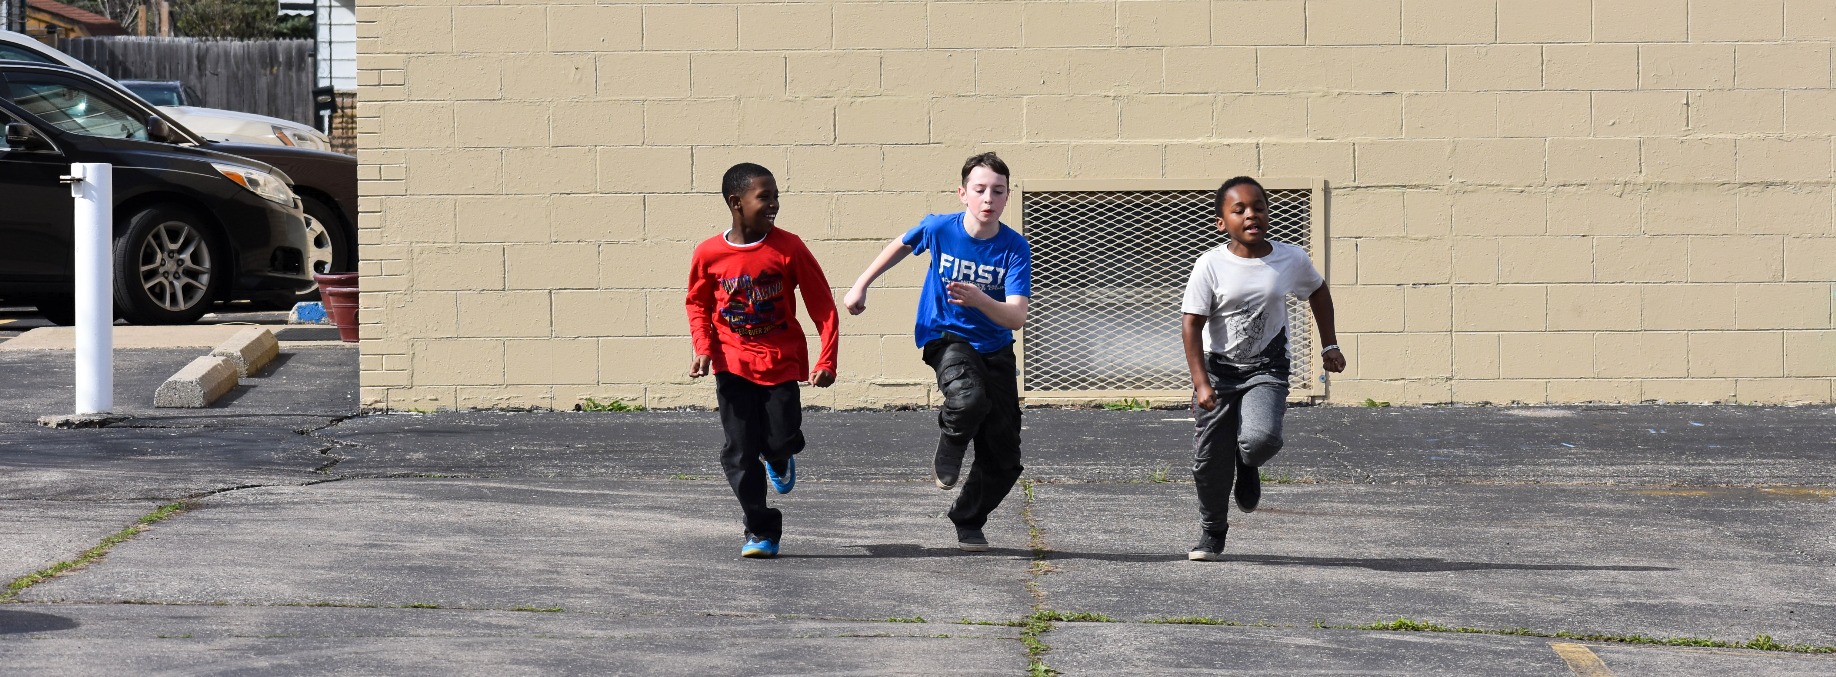 Three boys race each other across an empty lot